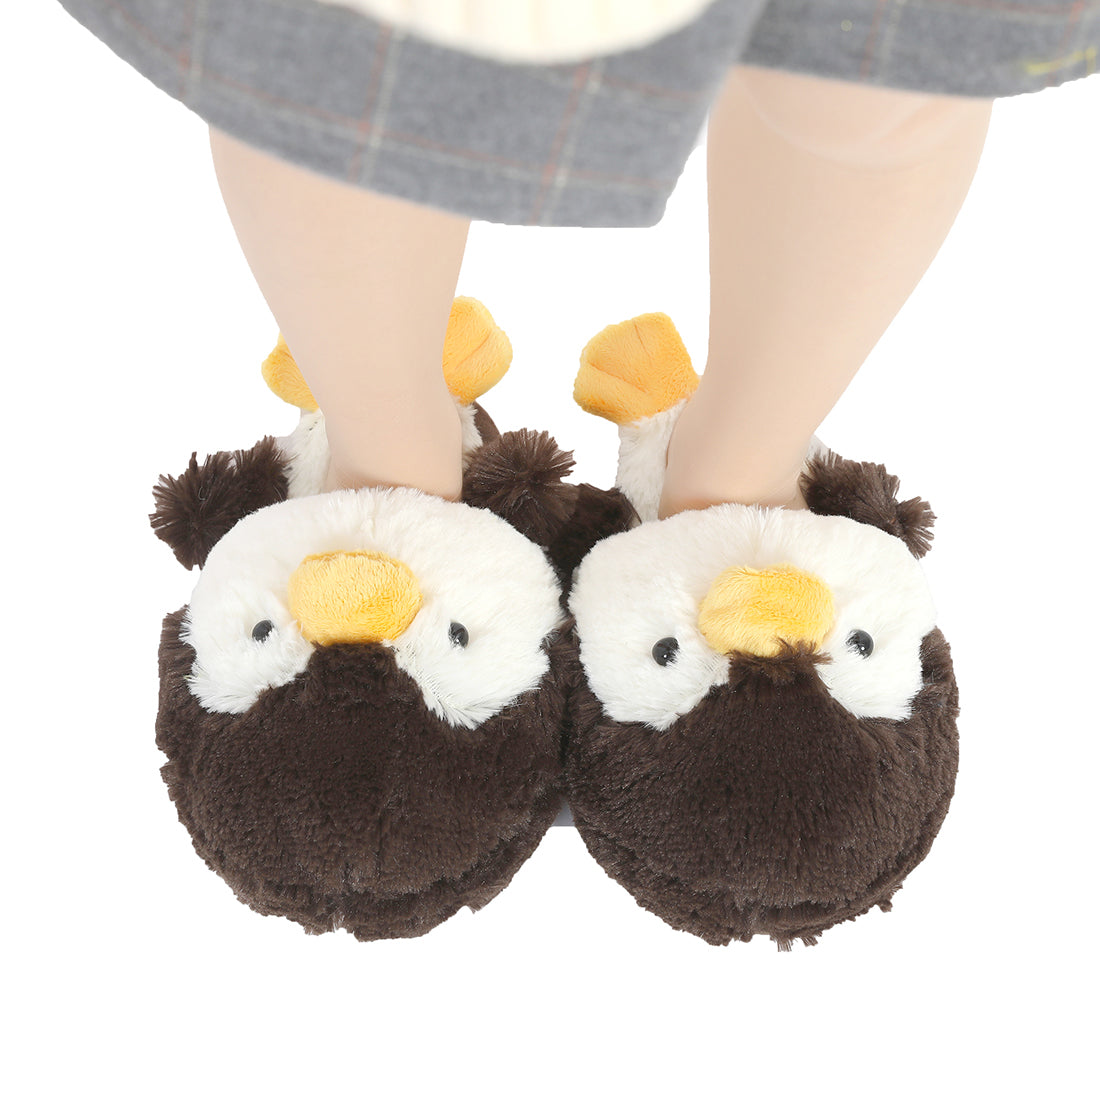 Millffy Kawaii Plush Duck Feet Slippers Novelty Warm Winter Teen Slippers Adult